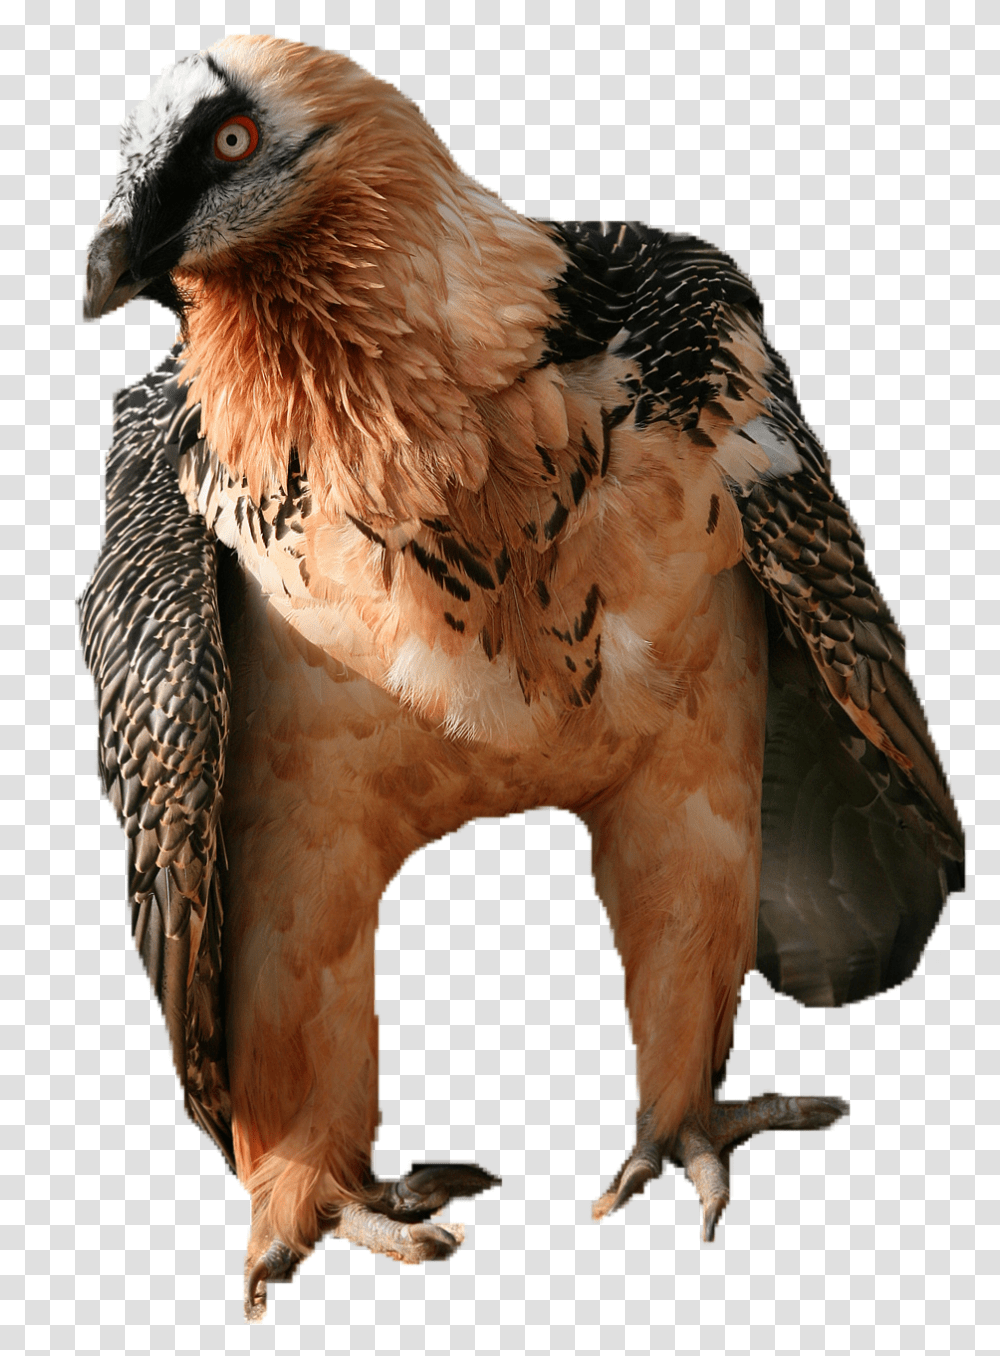 Vulture, Bird, Animal, Condor, Chicken Transparent Png